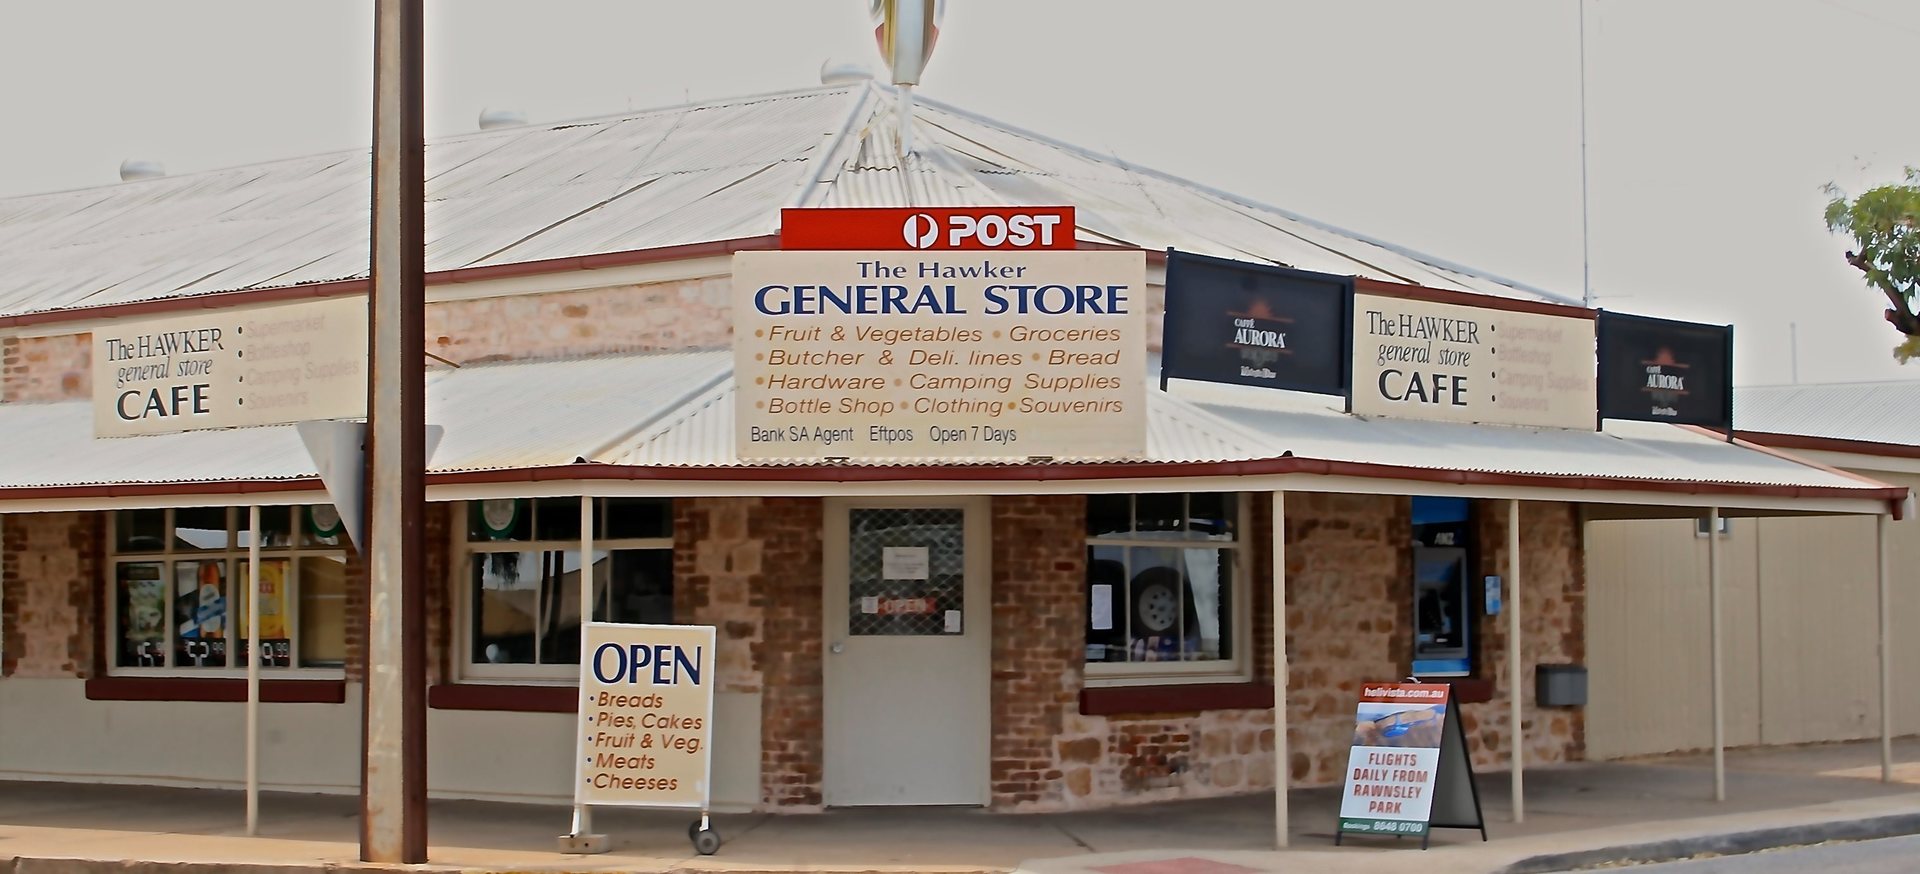 Coming Soon Post Office General Store  Hawker, SA  - $320,000...